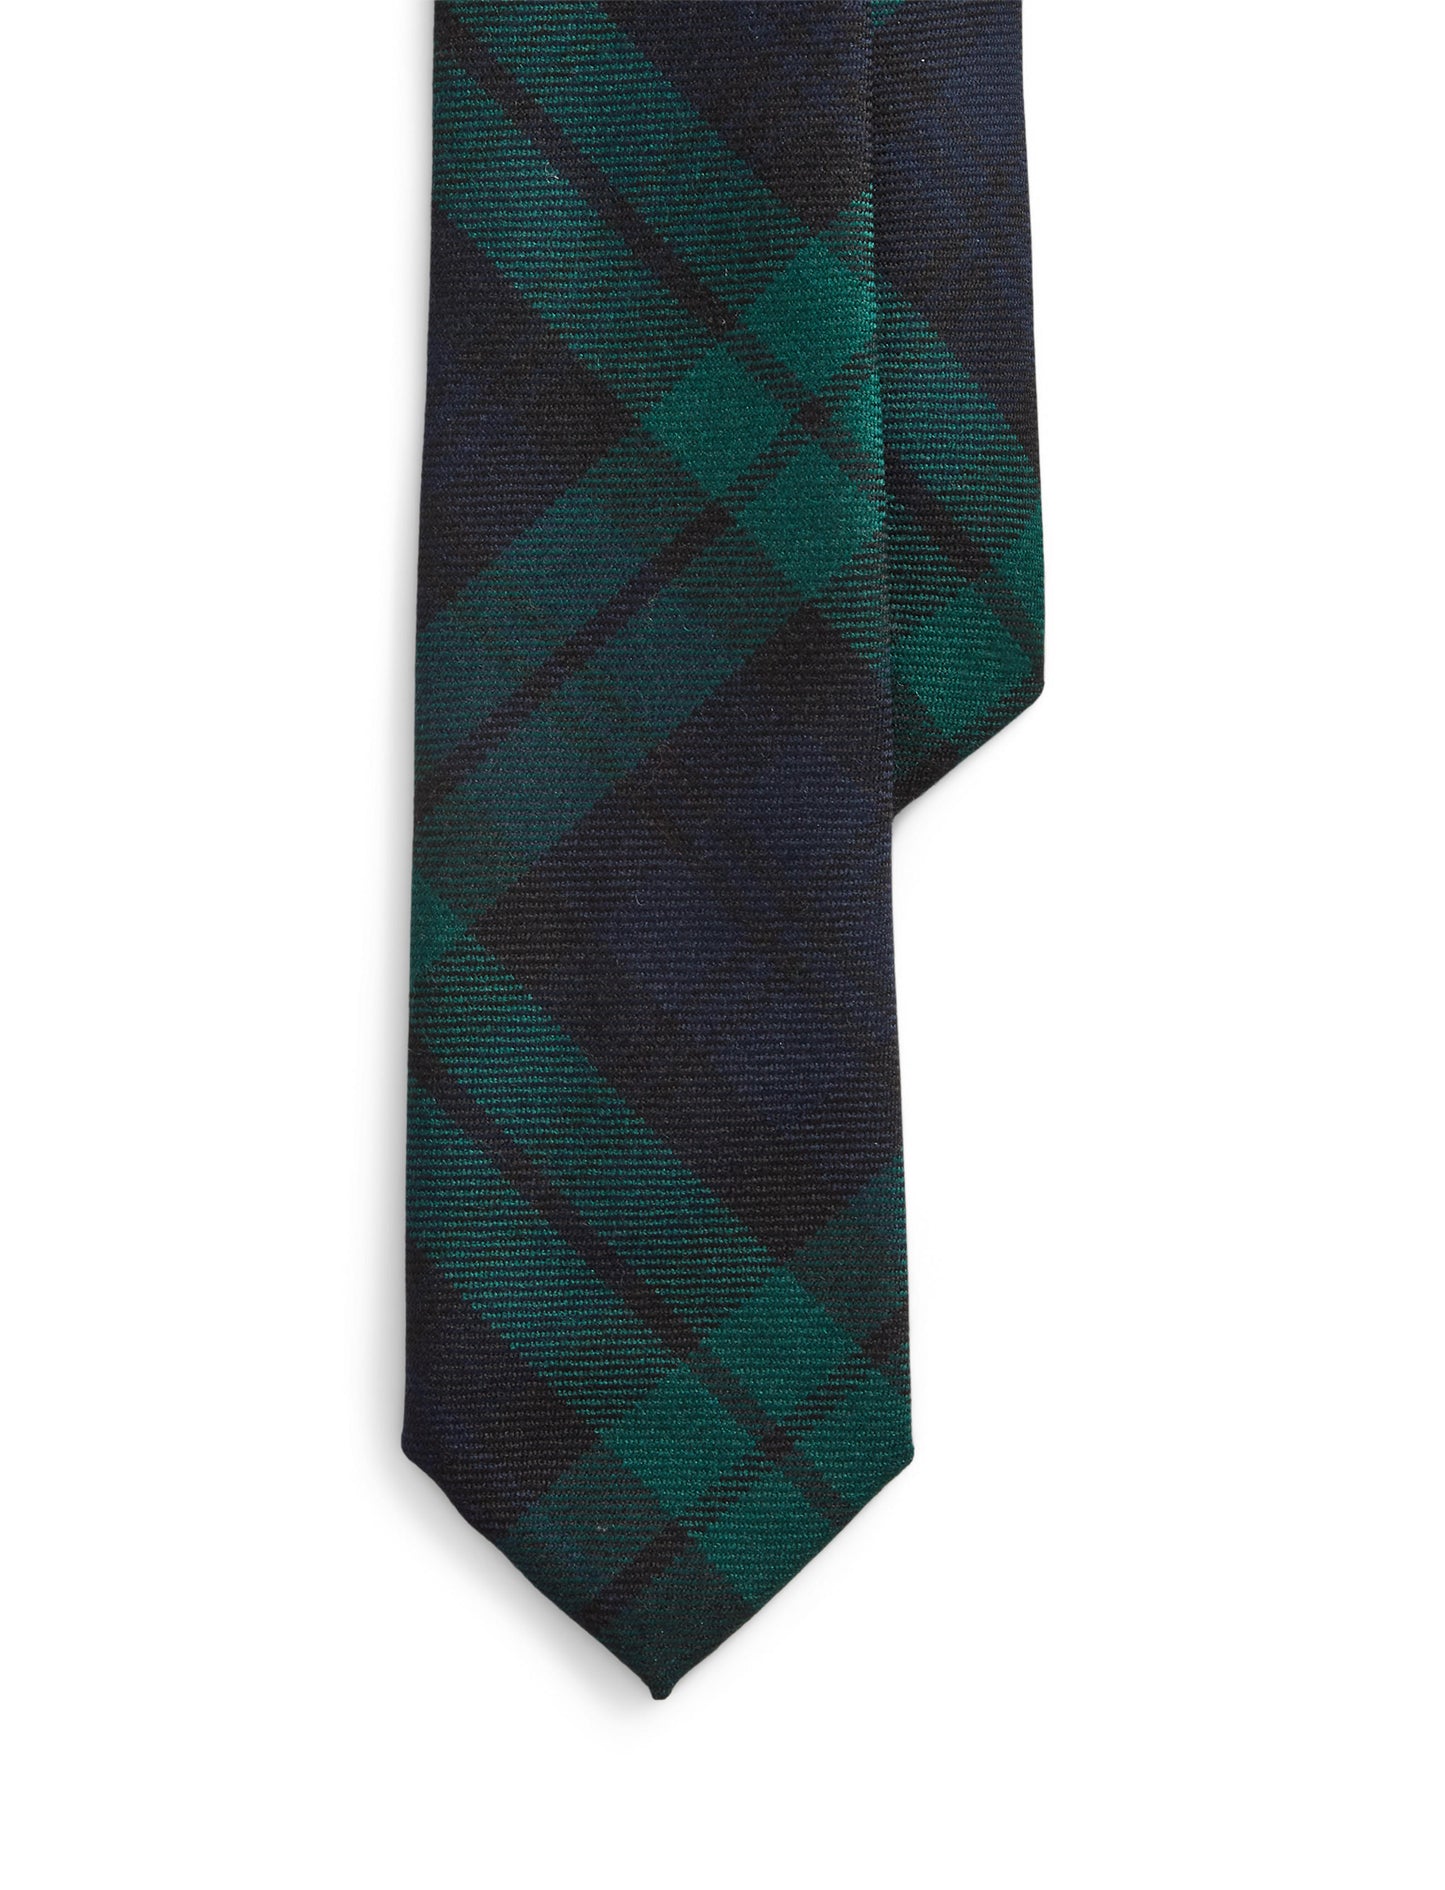 Polo Ralph Lauren Scottish Tartan Tie Navy/Green